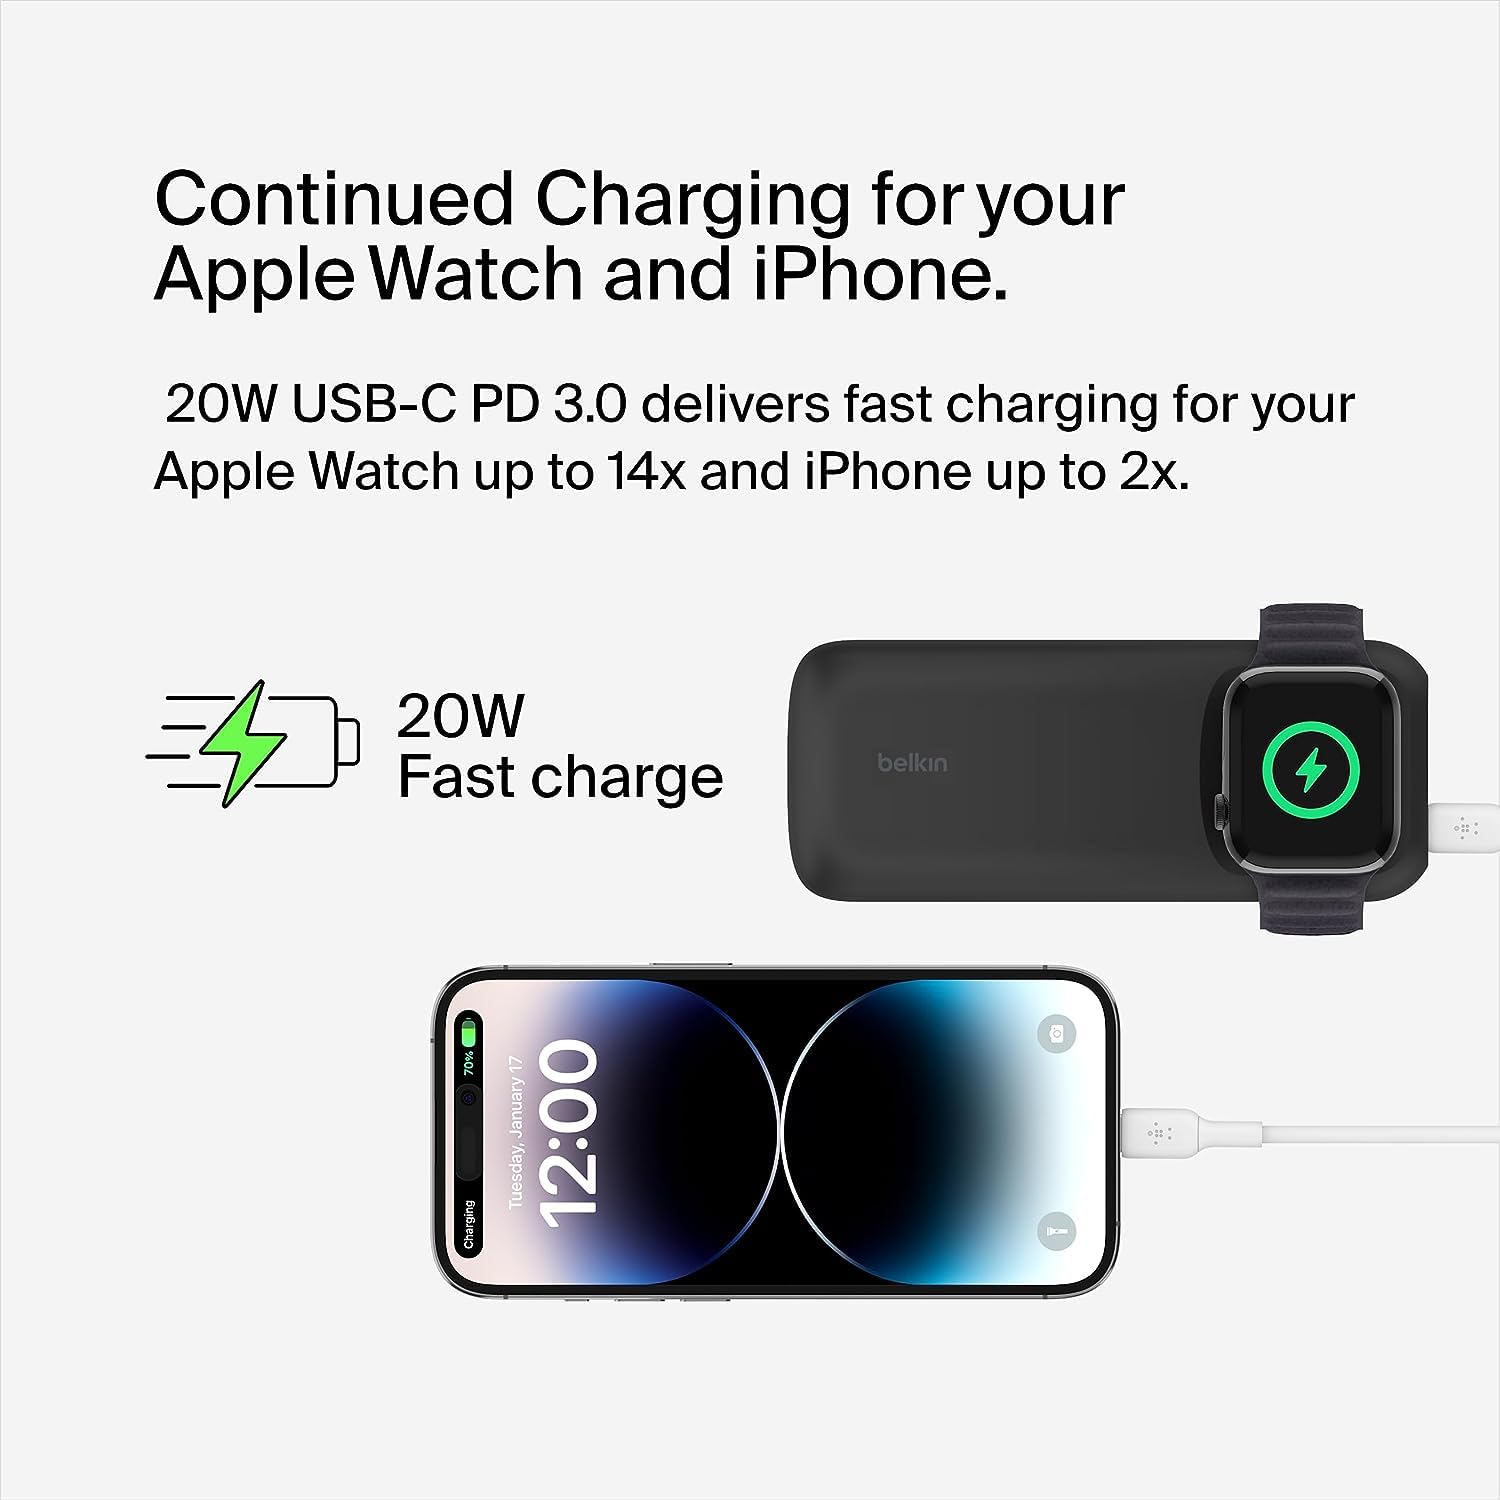 Station de recharge BOOST UP pour Apple Watch et iPhone - Belkin